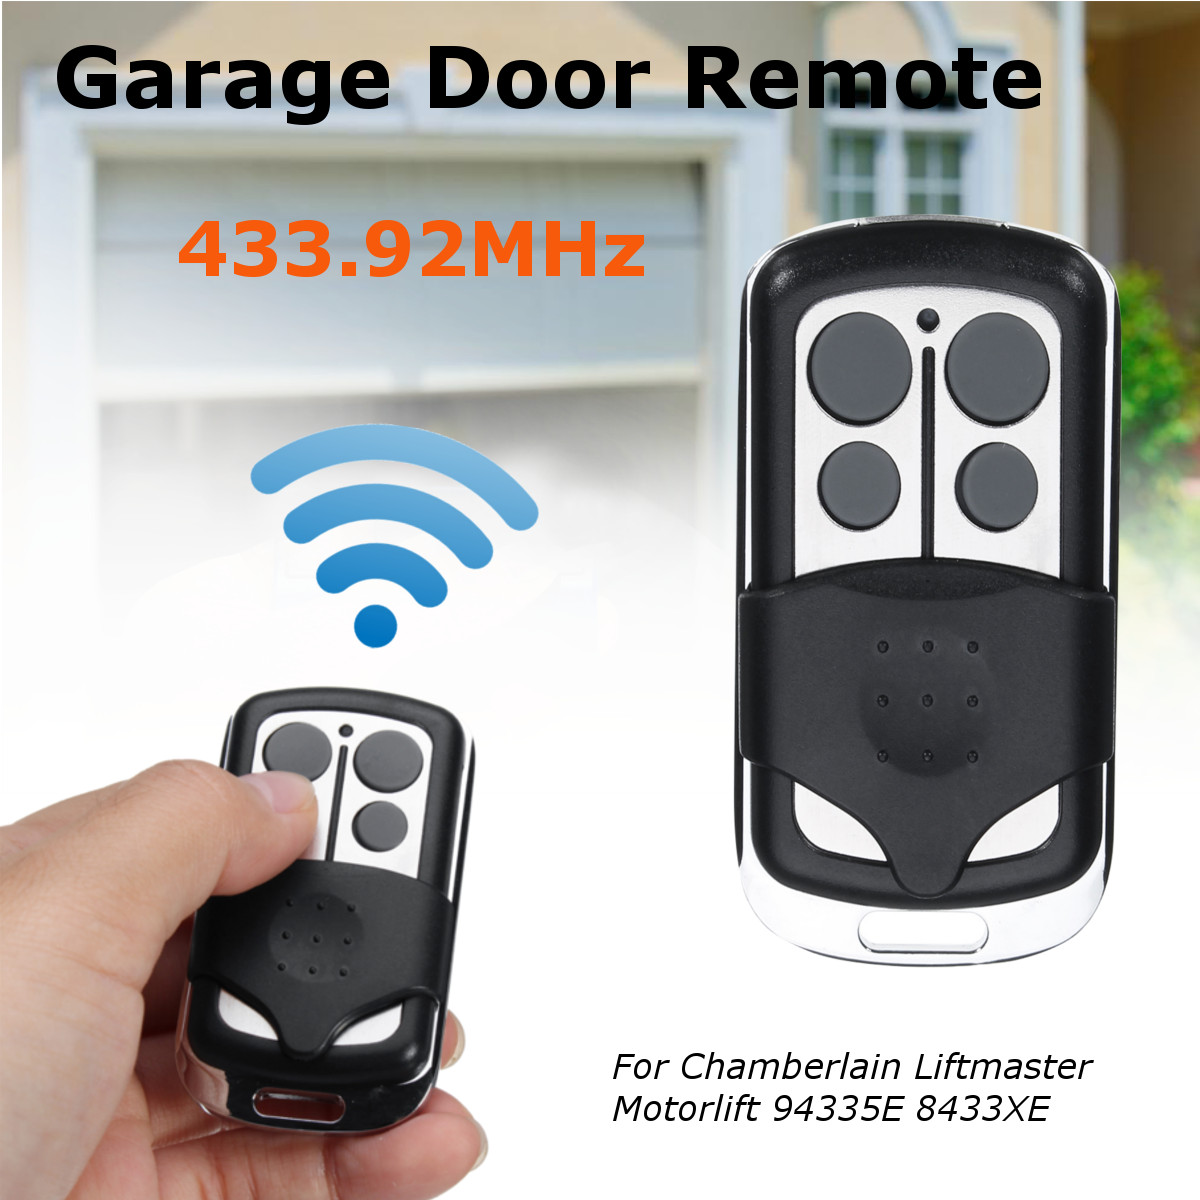 Garage Door Remote 433.92 MHz For Chamberlain Liftmaster Motorlift 94335E 